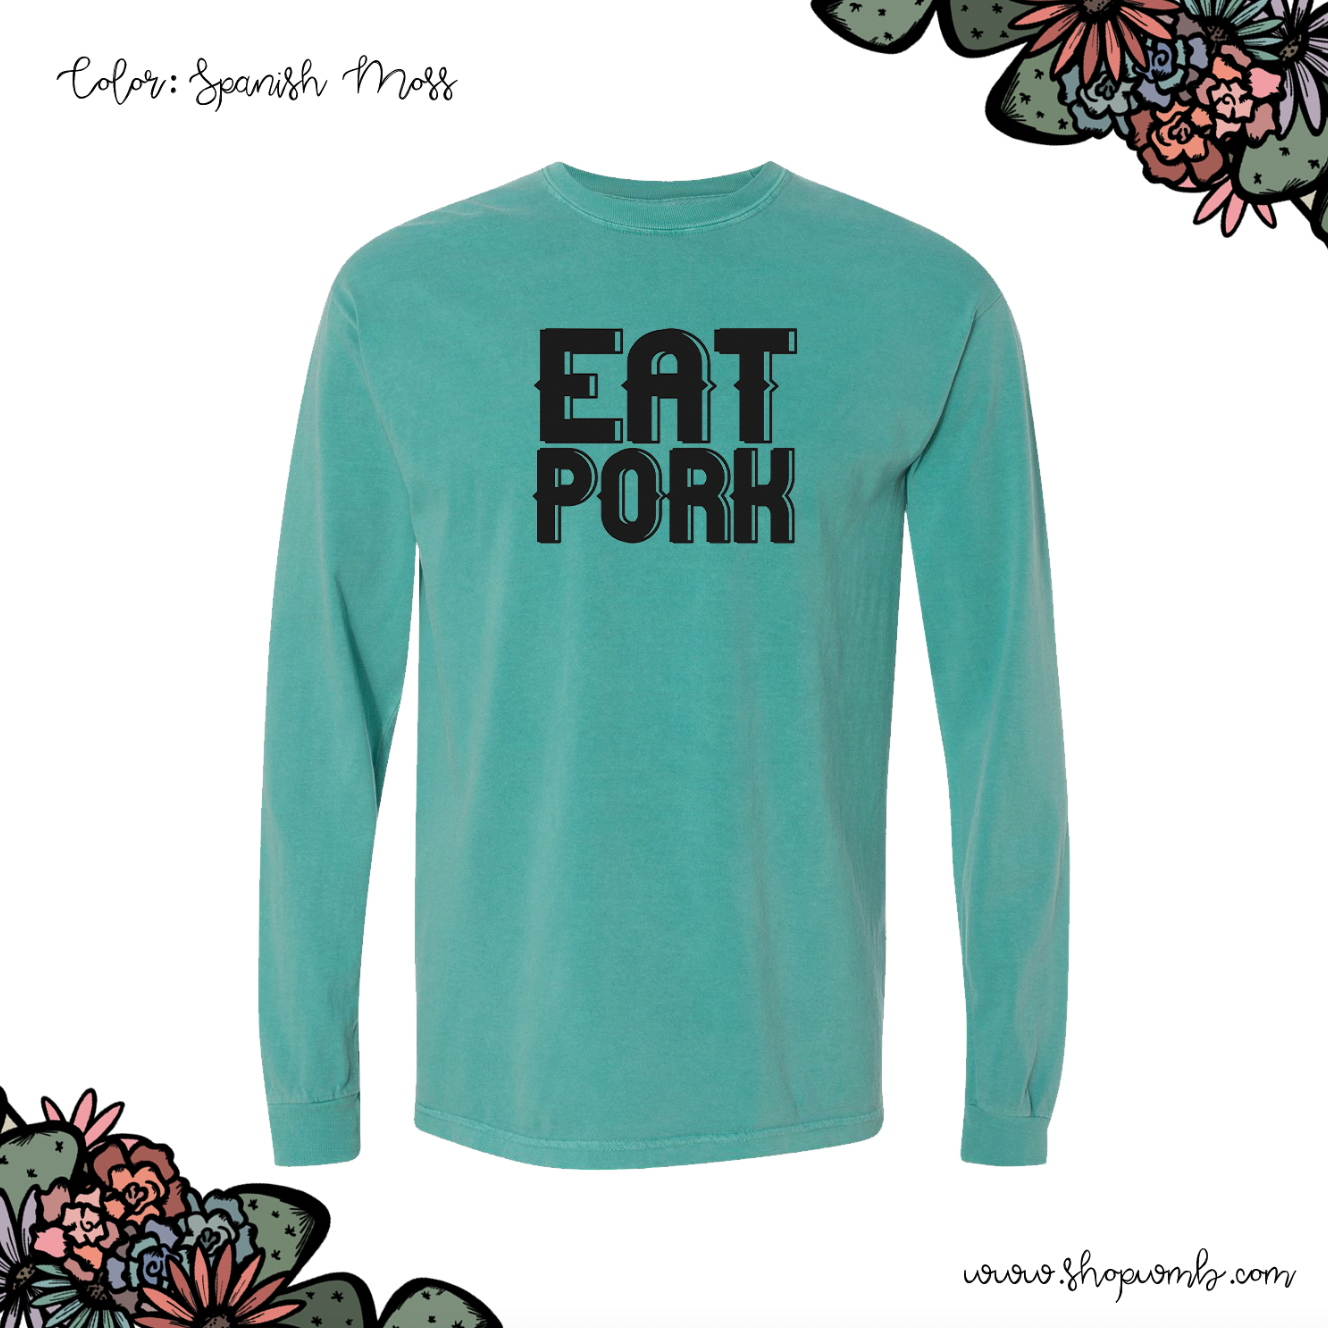 Eat Pork LONG SLEEVE T-Shirt (S-3XL) - Multiple Colors!